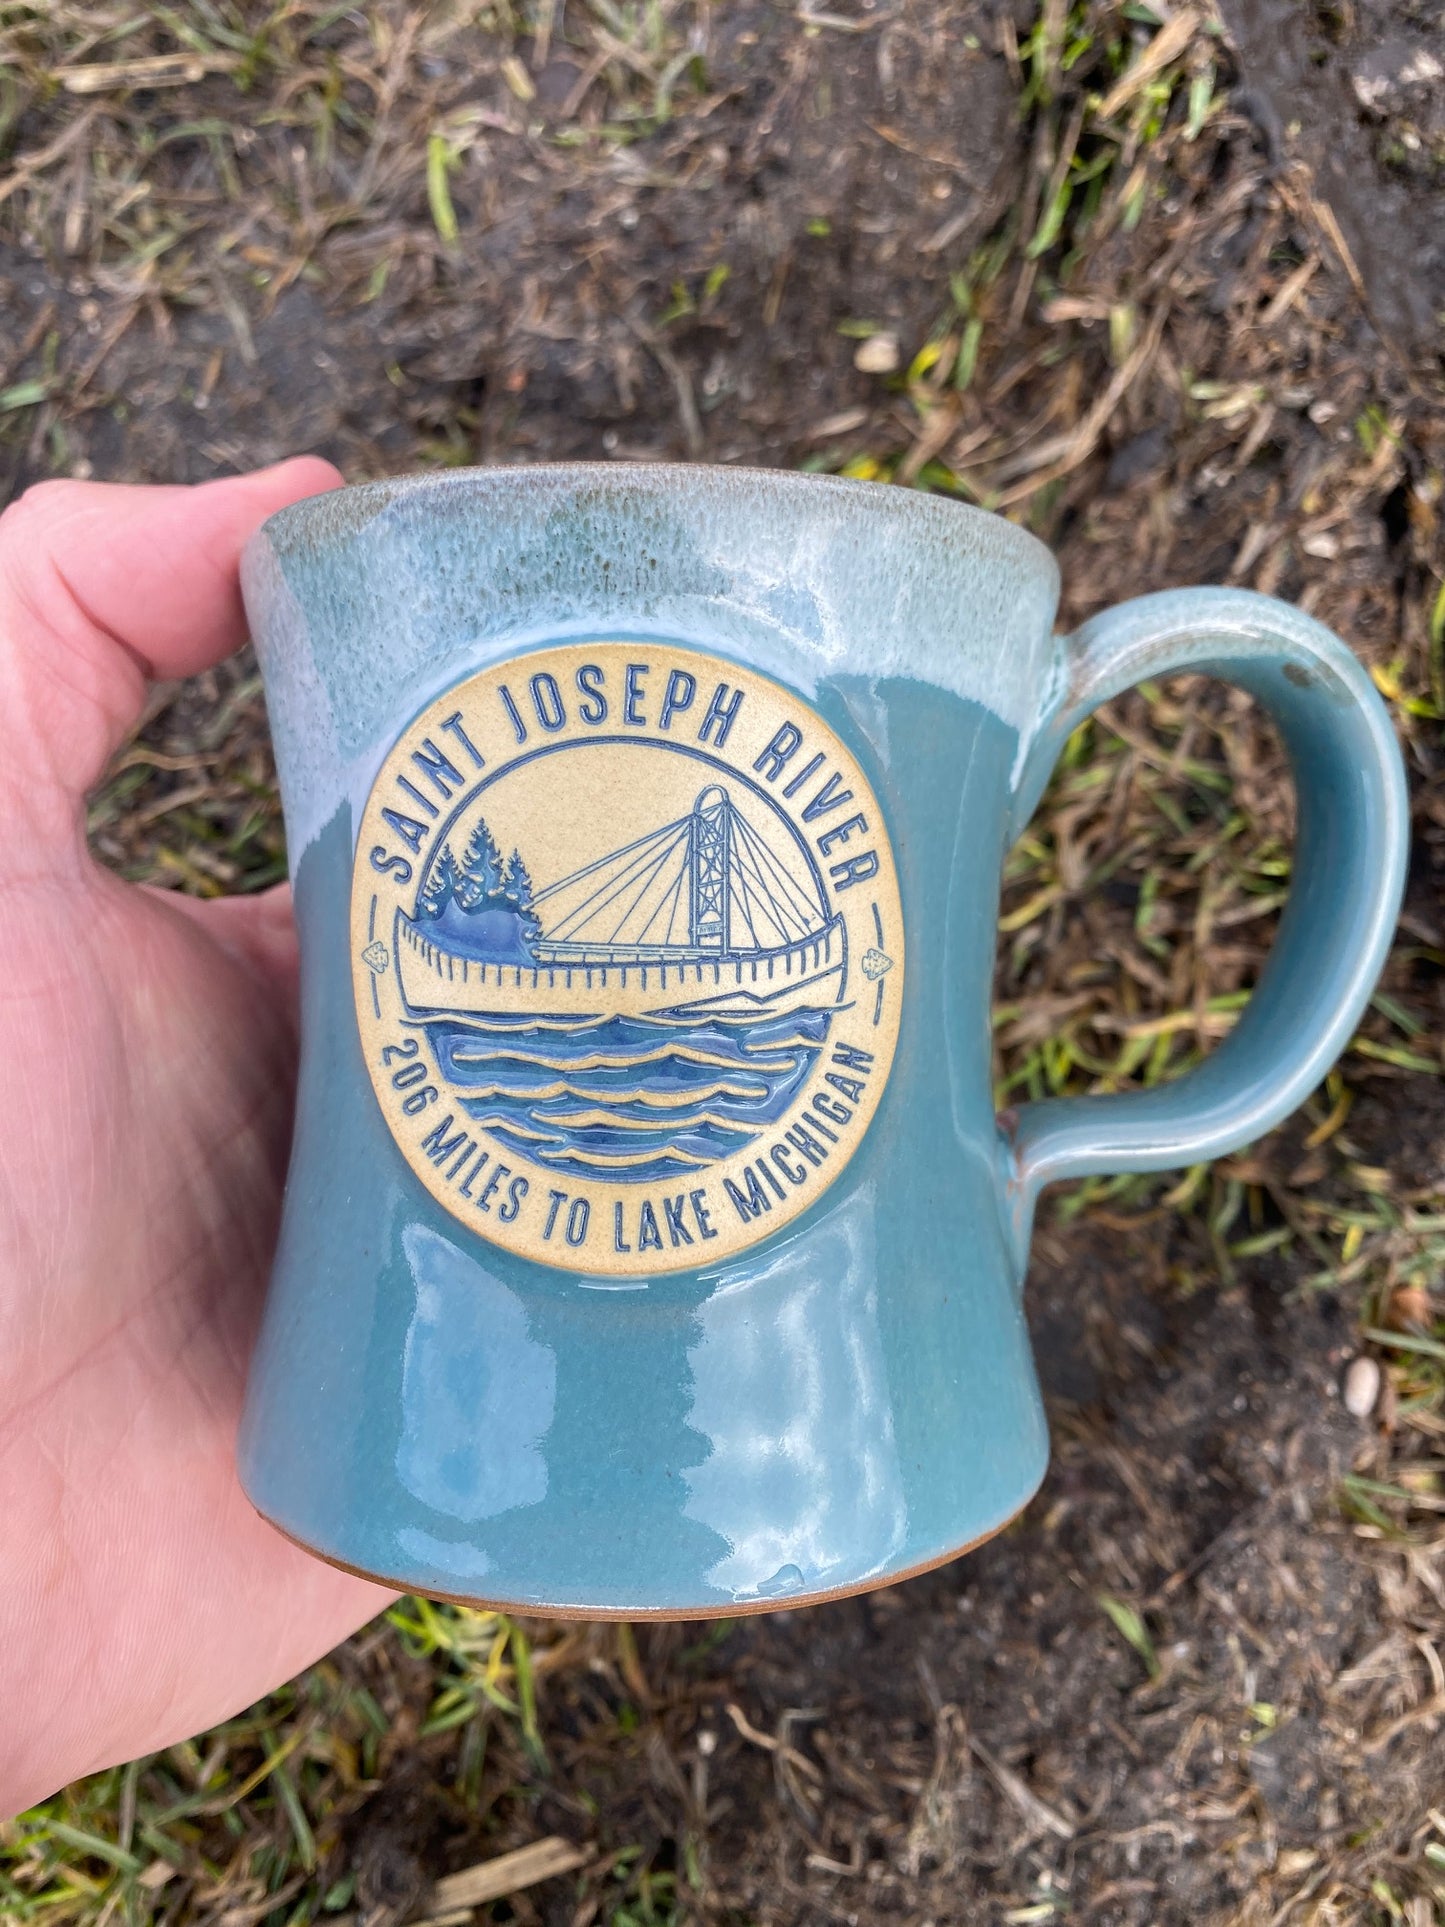 st Joseph river indiana mug